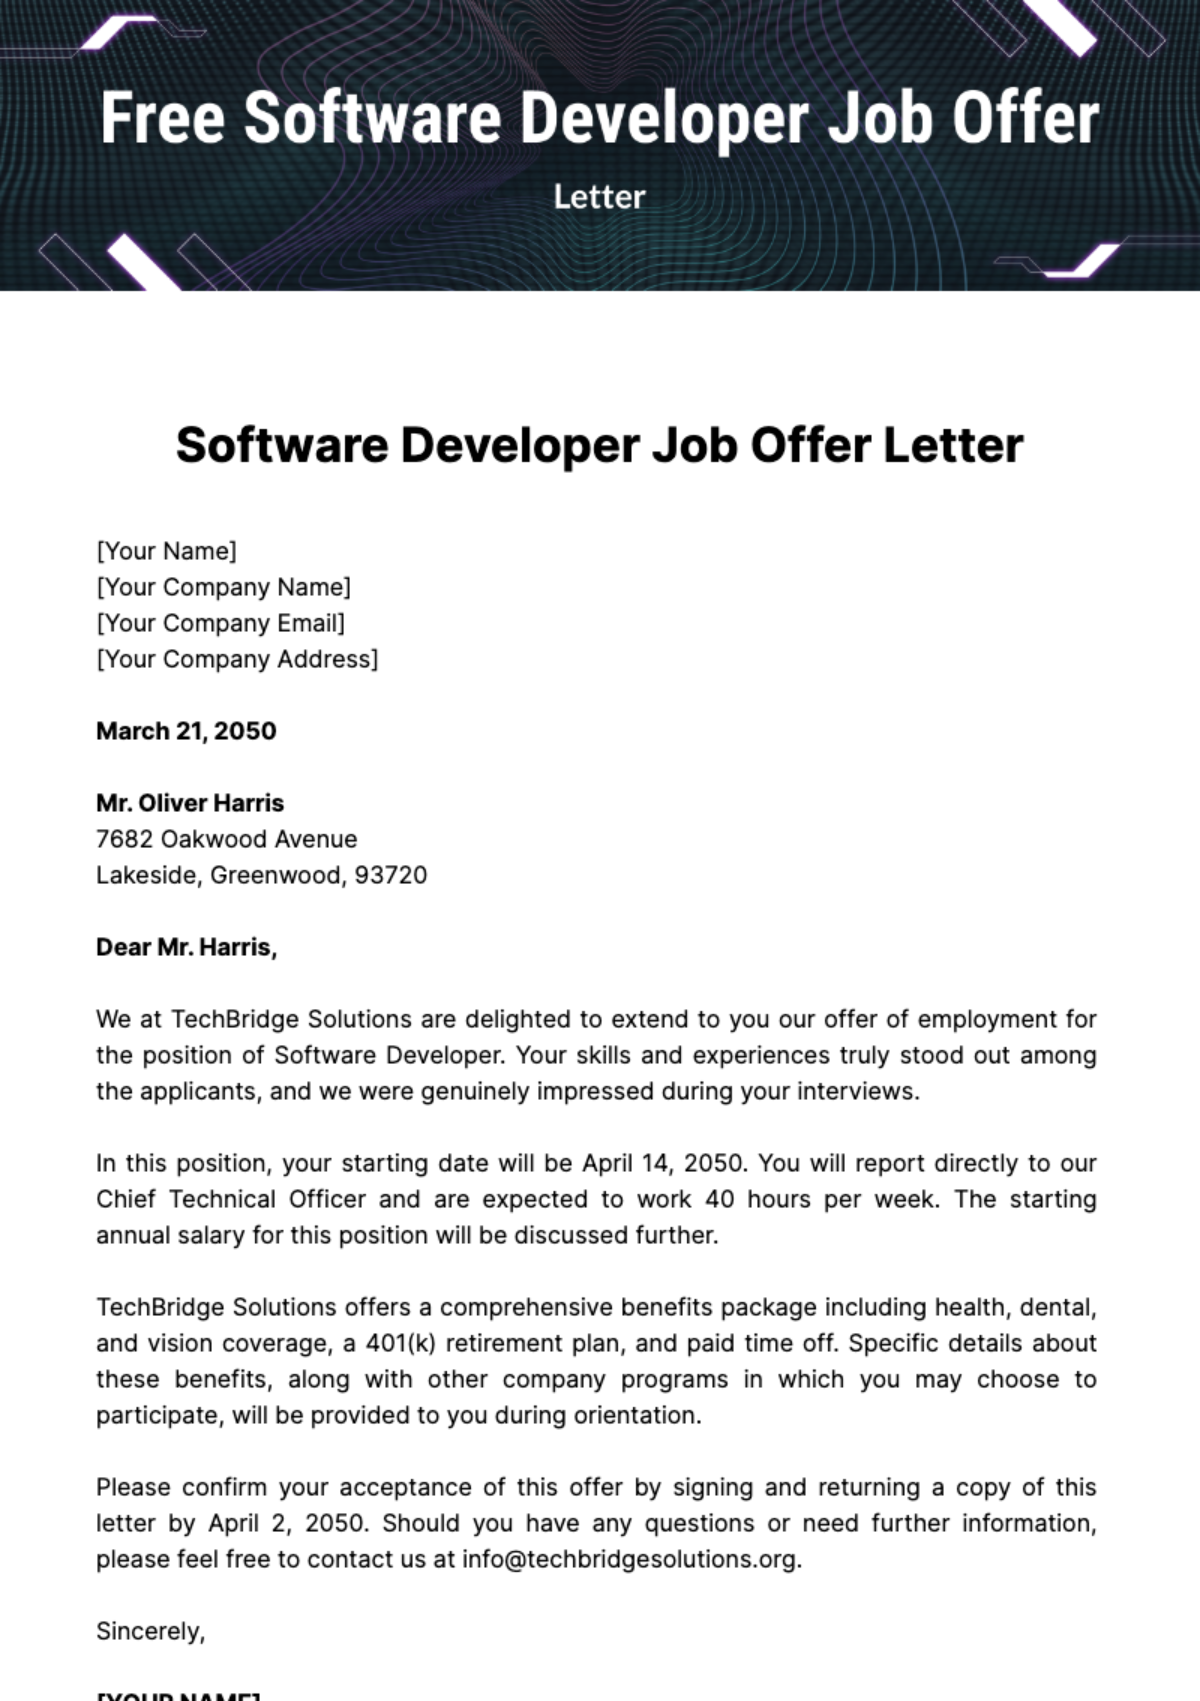 Free Software Developer Job Offer Letter Template